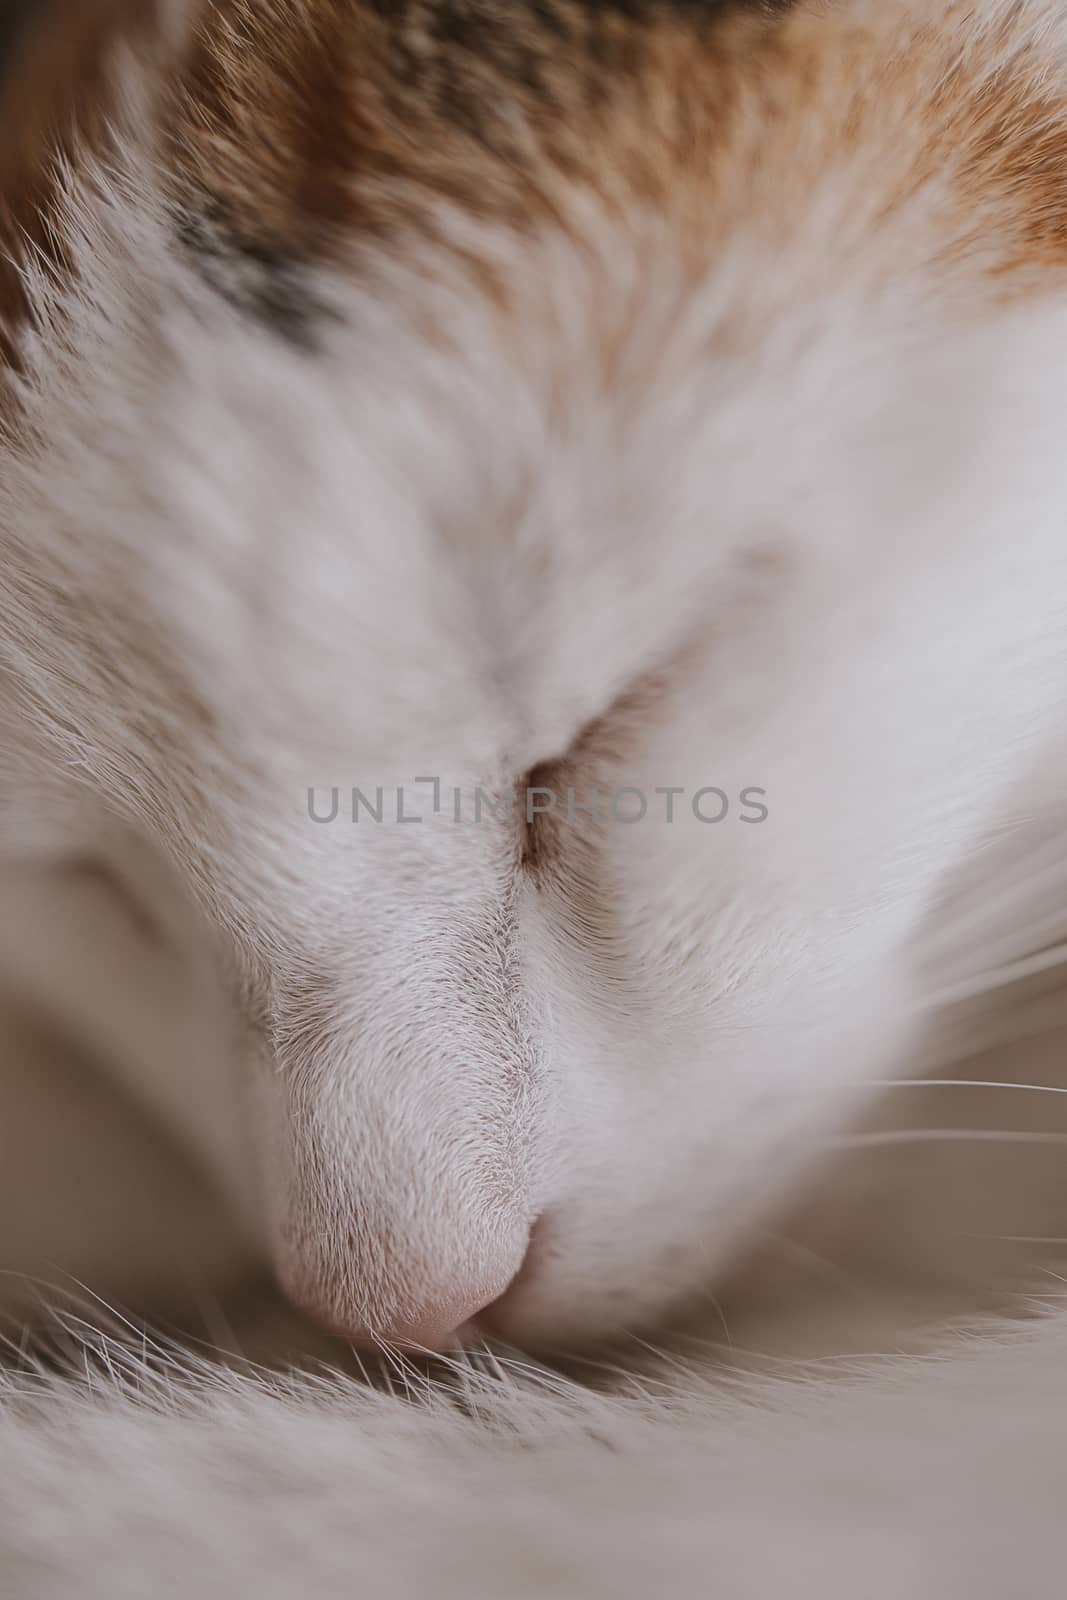 cute little white-red sleeping cat in closeup by Lukrecja